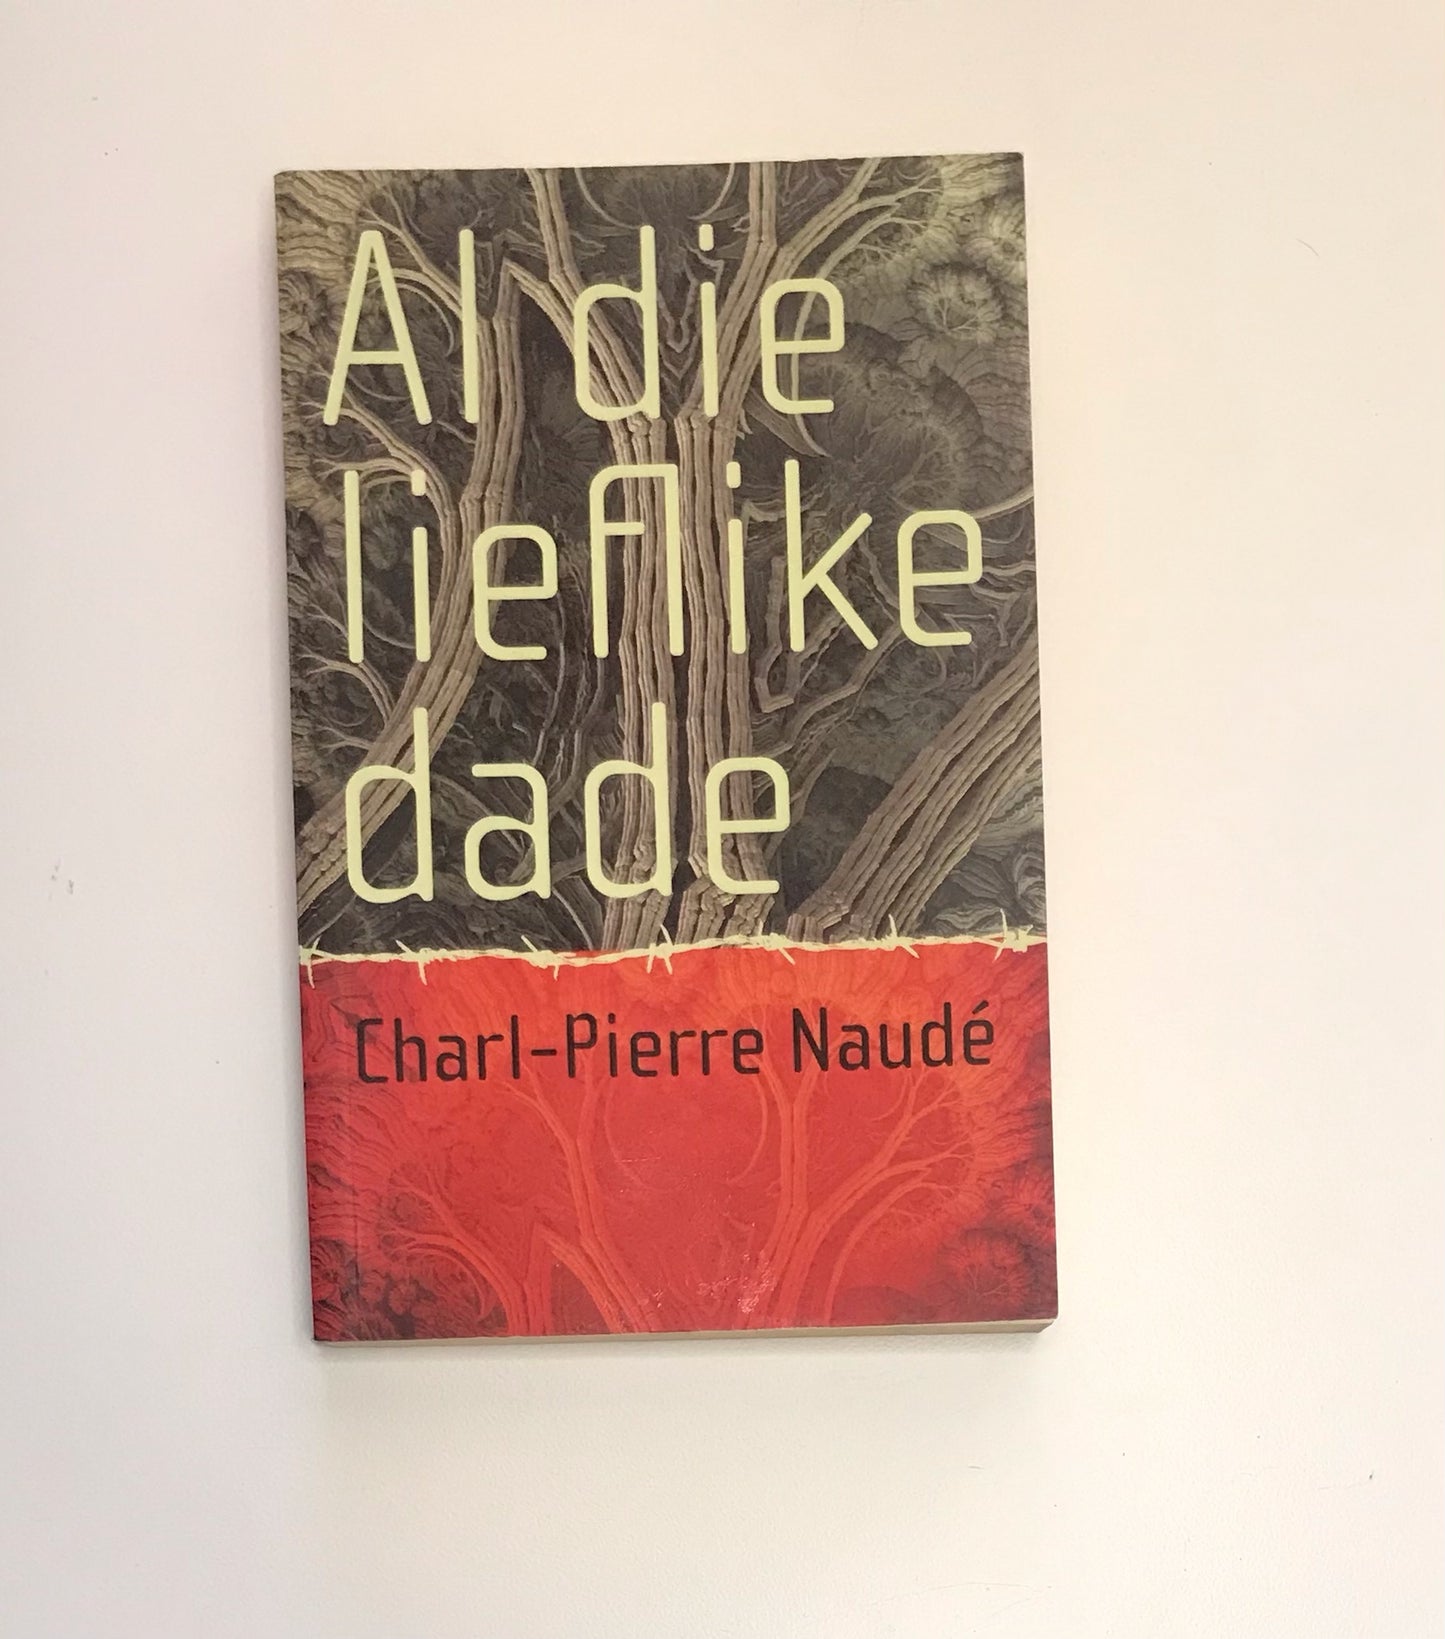 Al die lieflike dade - Charl-Pierre Naudé